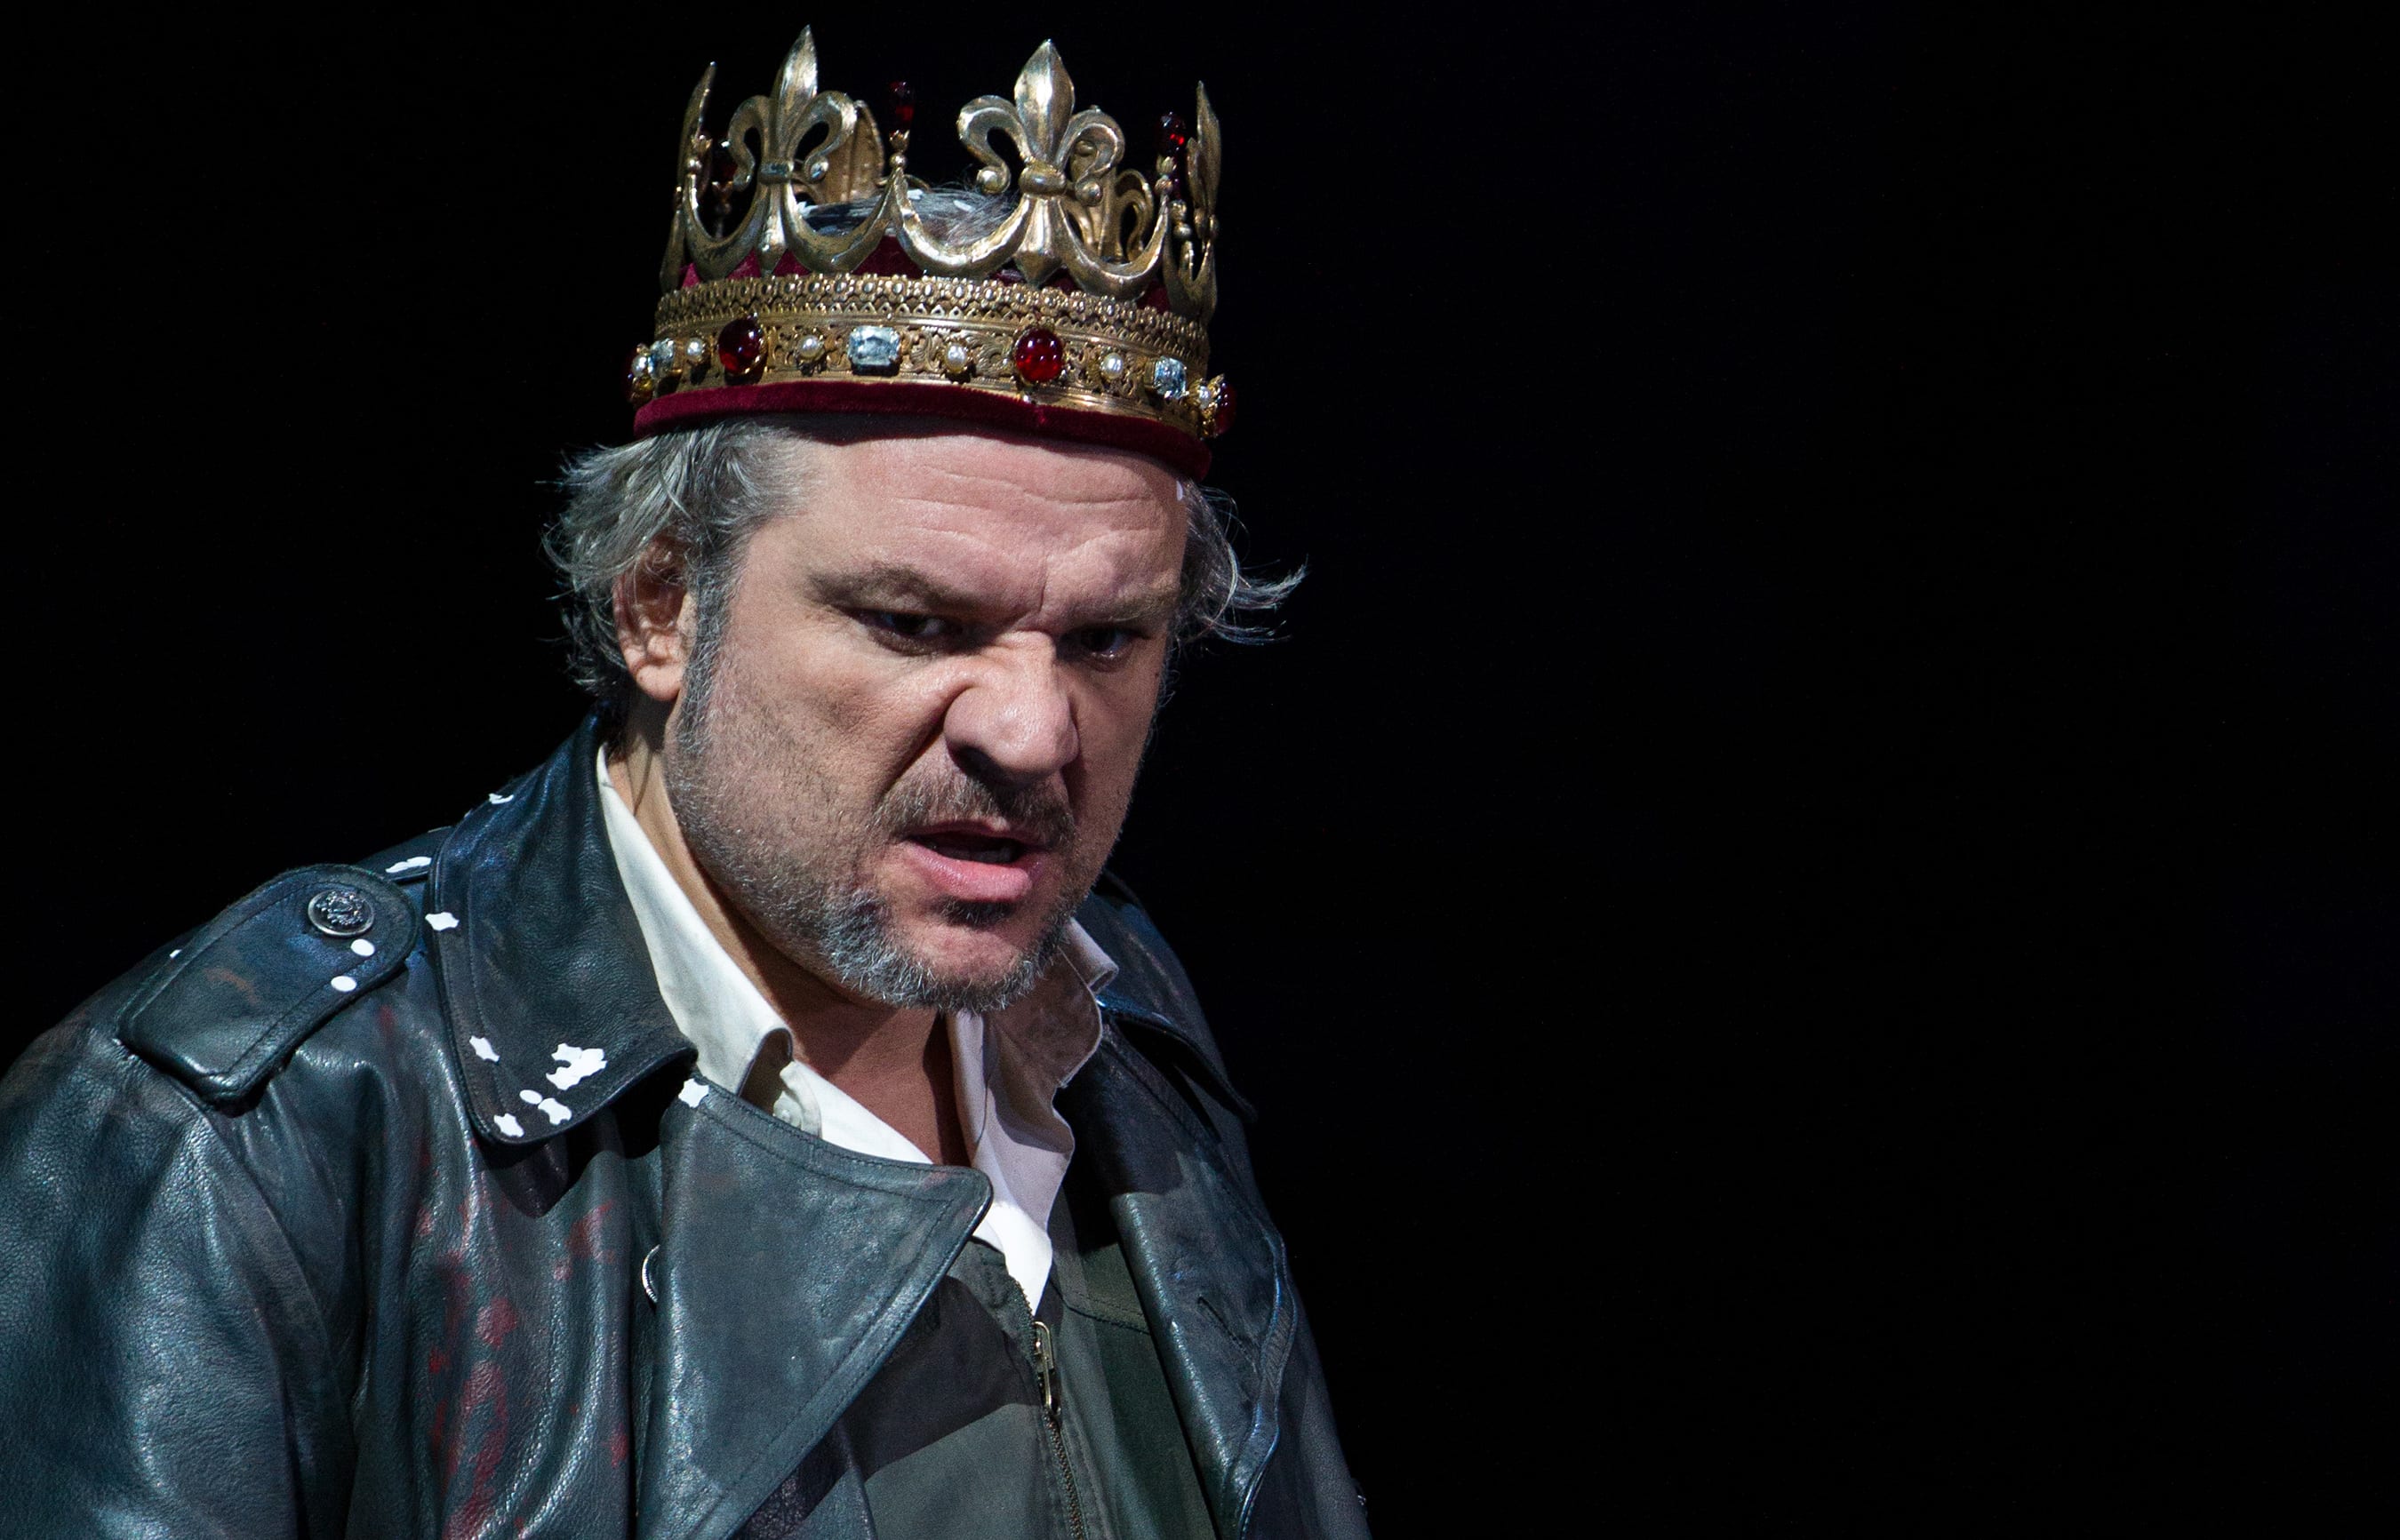 Željko Lučić in the title role of Verdi's Macbeth